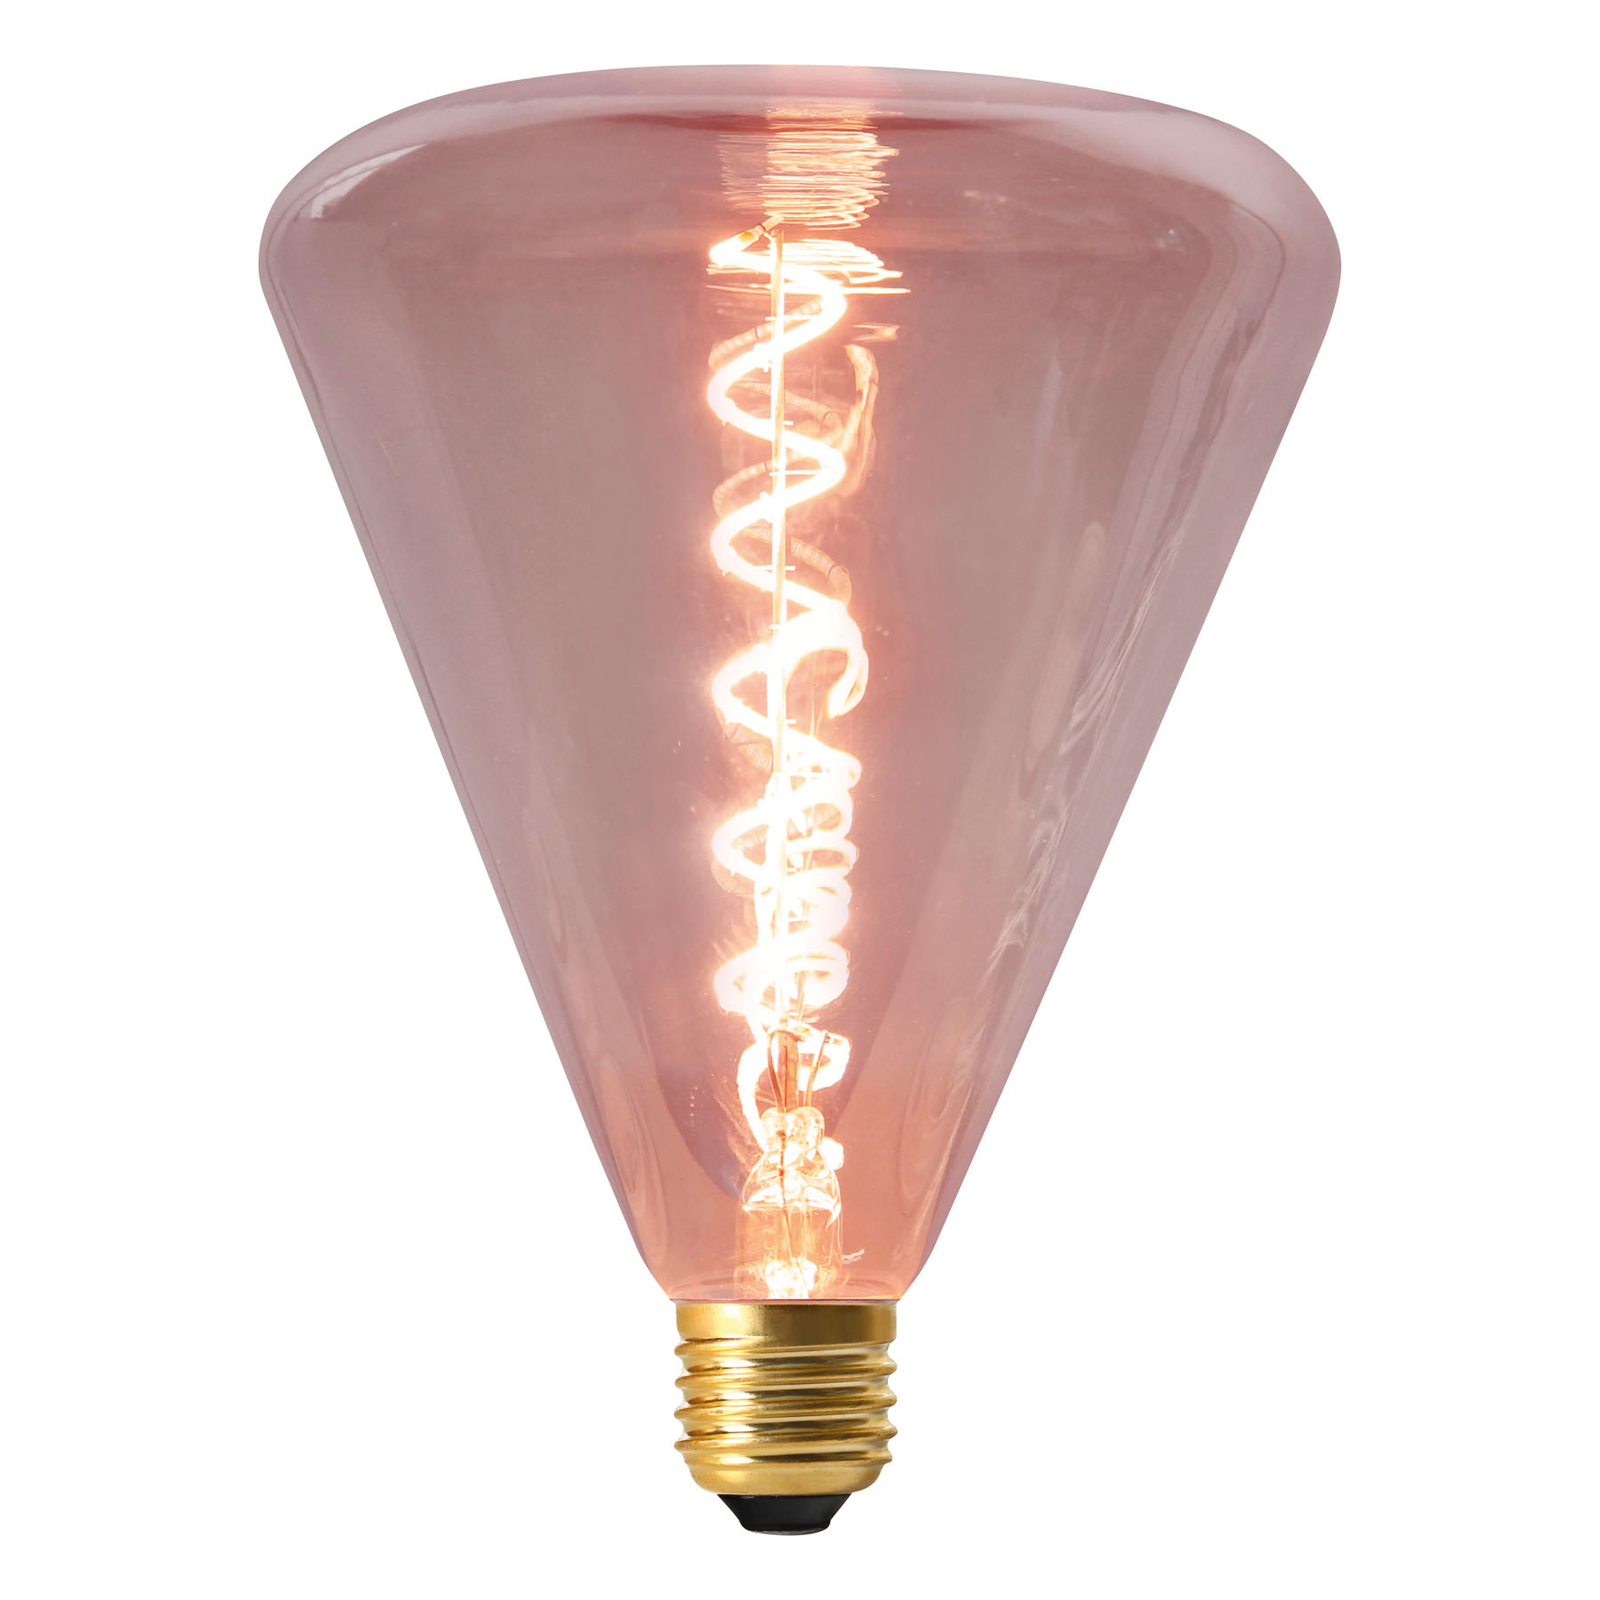 LED-lampa Dilly E27 4W 2200K dimbar, rödfärgad